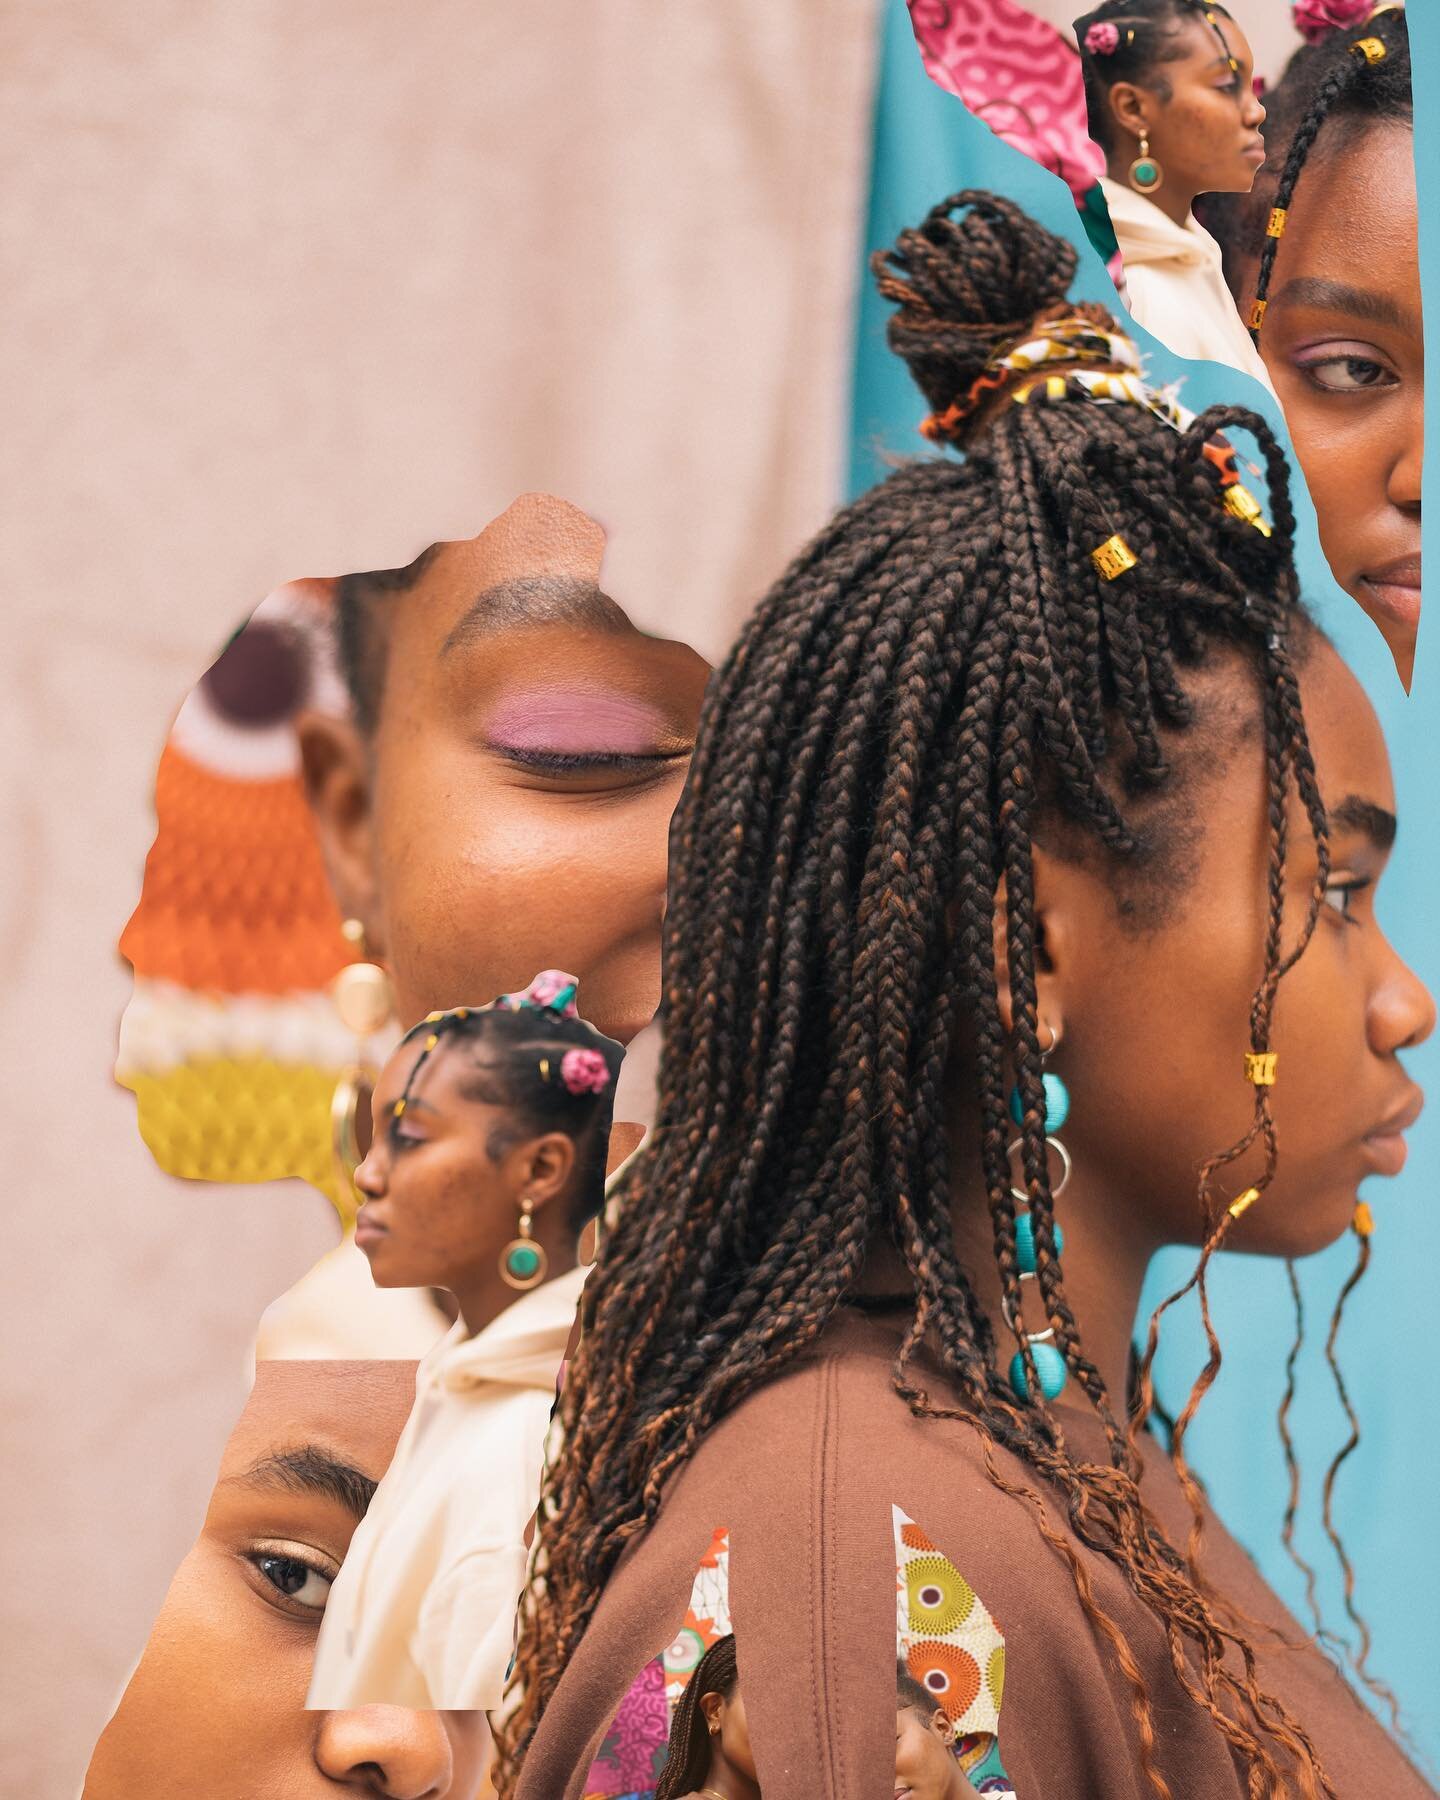 A celebration of beauty through hair and print #blackisbeautiful